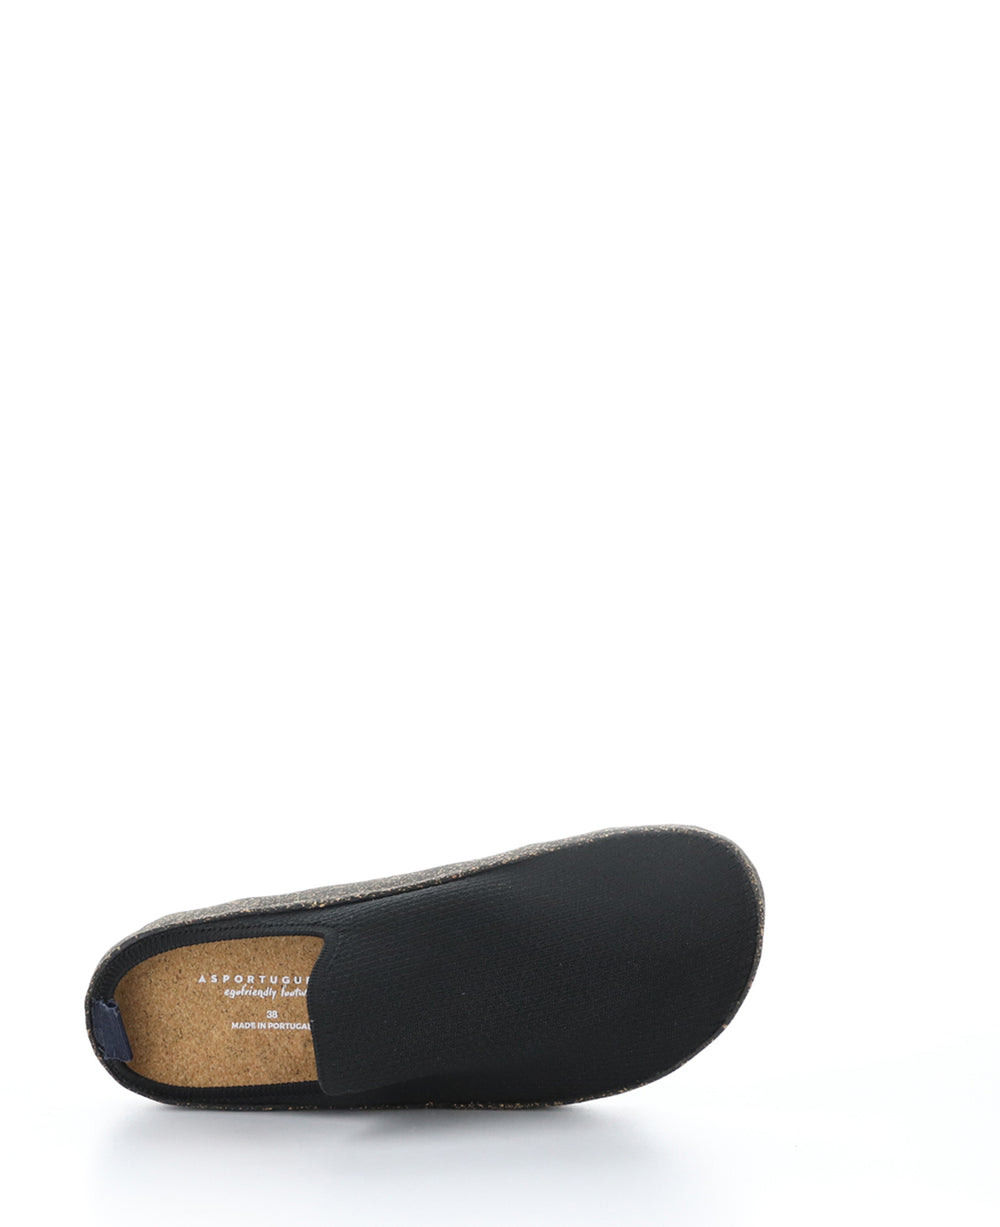 CLOG105ASPM BLACK Slip-on Shoes|CLOG105ASPM Chaussures à Bout Rond in Noir